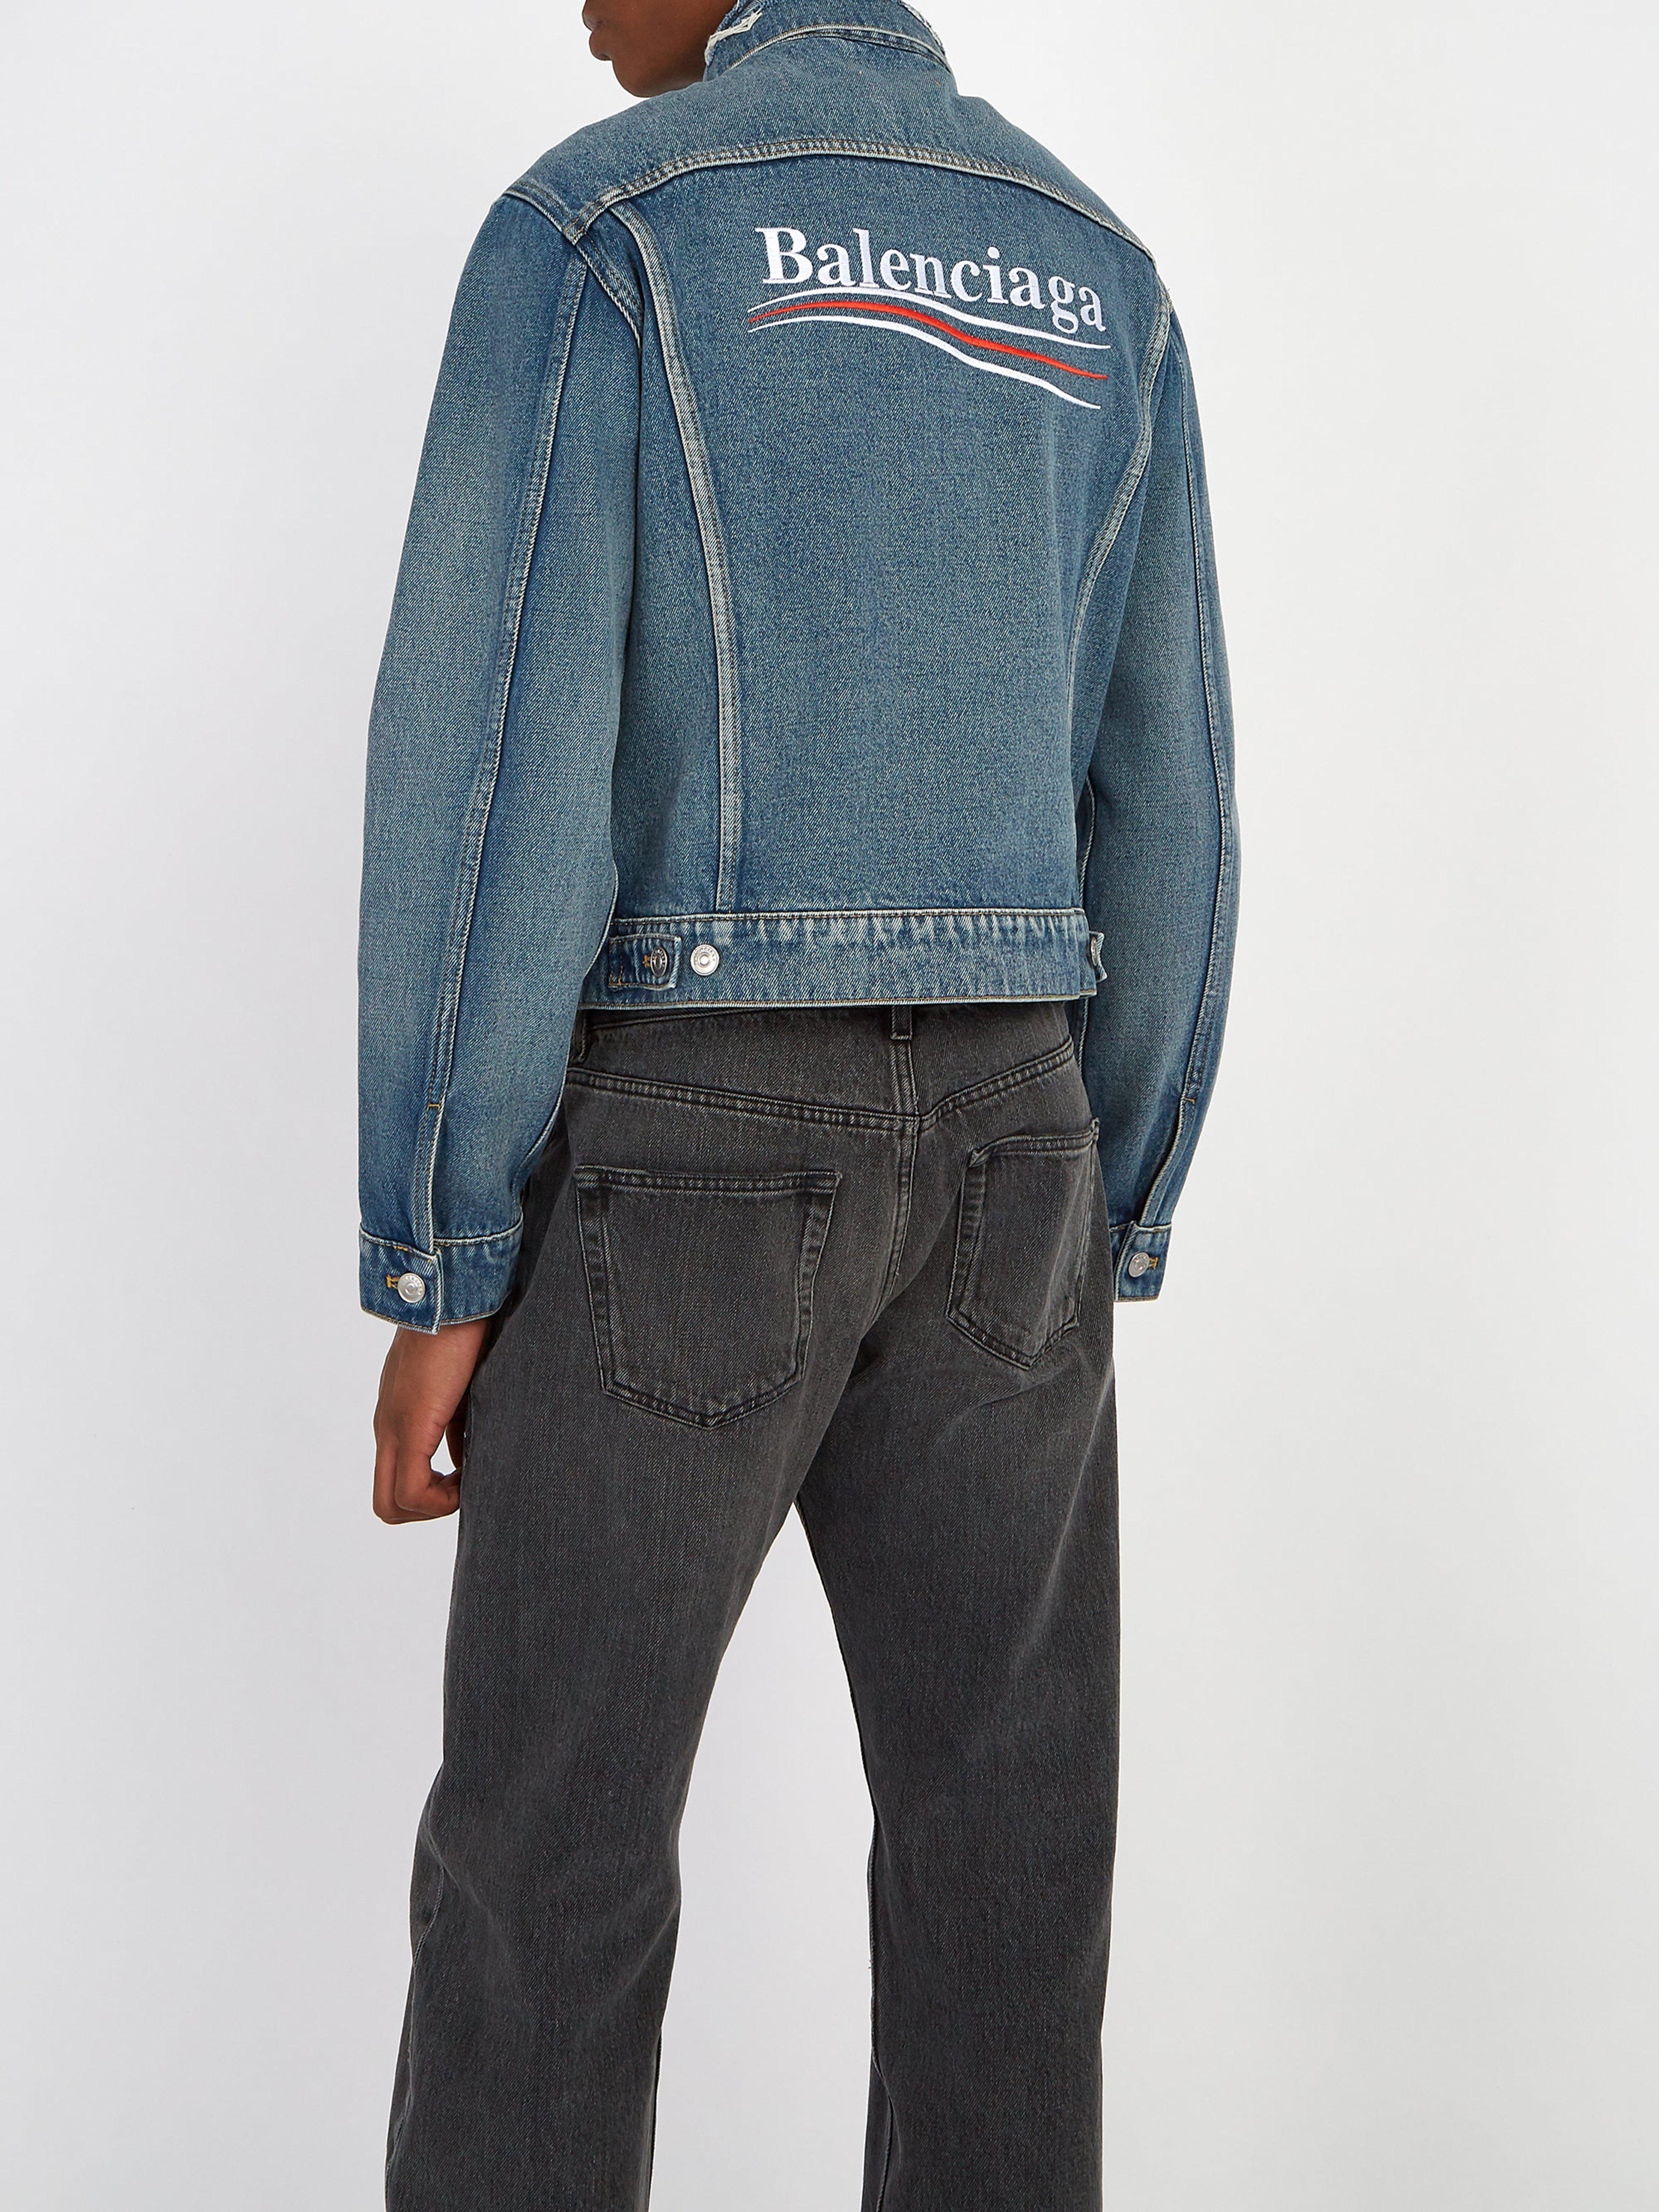 Balenciaga Slim Fit Logo Embroidered Denim Jacket in Blue for Men - Lyst